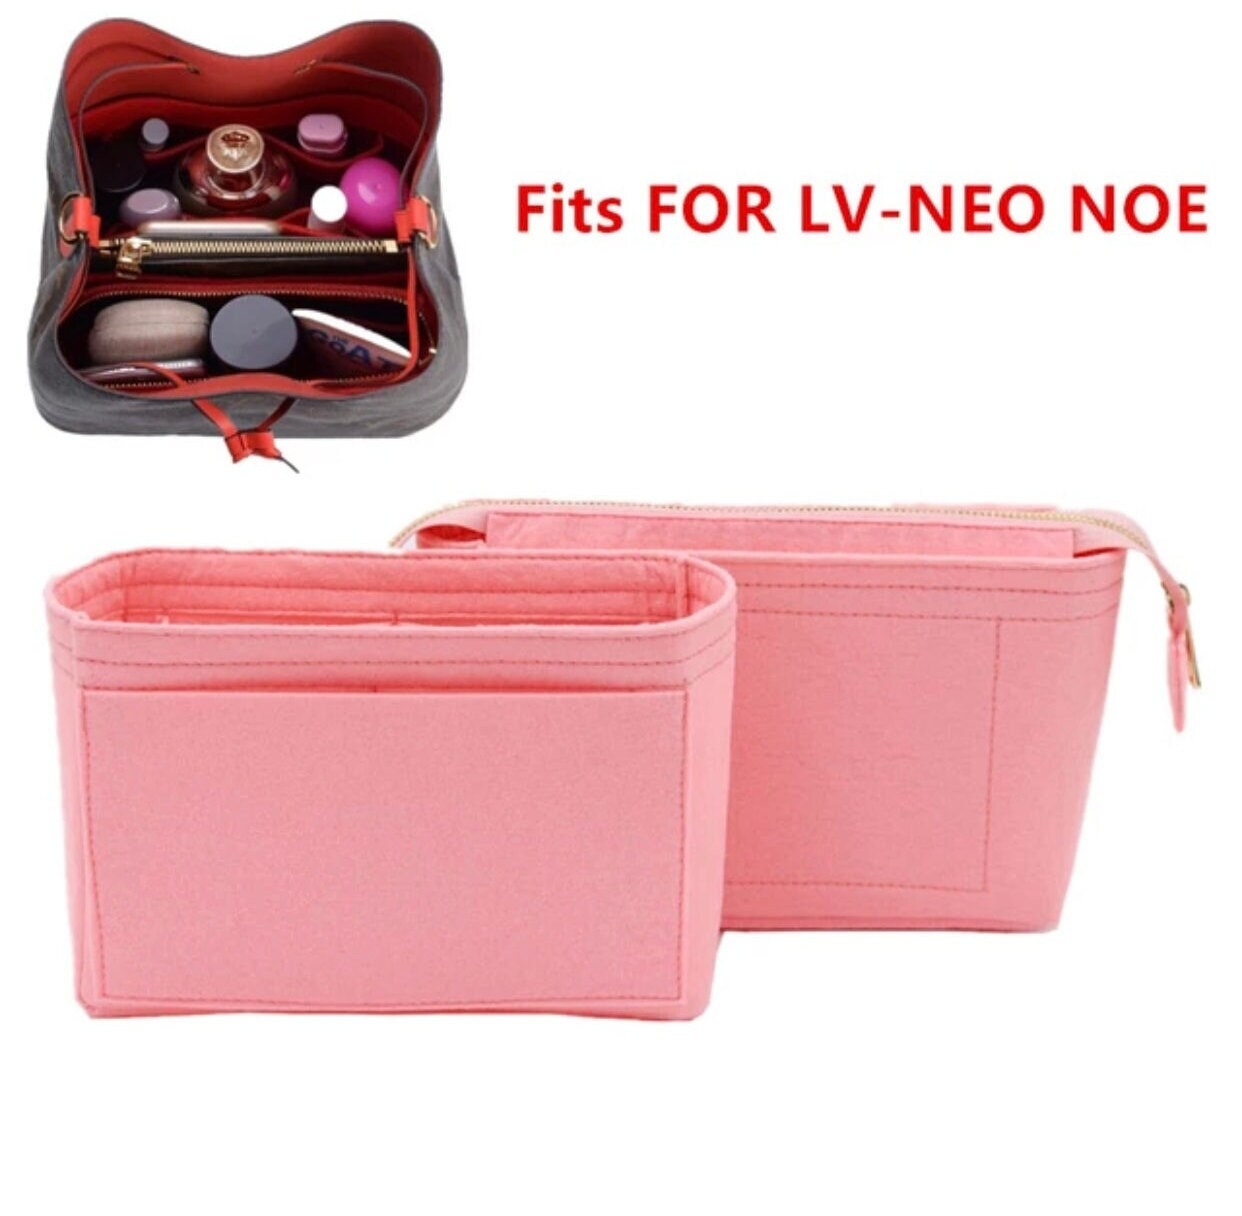 Buy NÉO NOÉ Neo Noe Bucket Bag Insert Organizer Lv Neo Noe Online